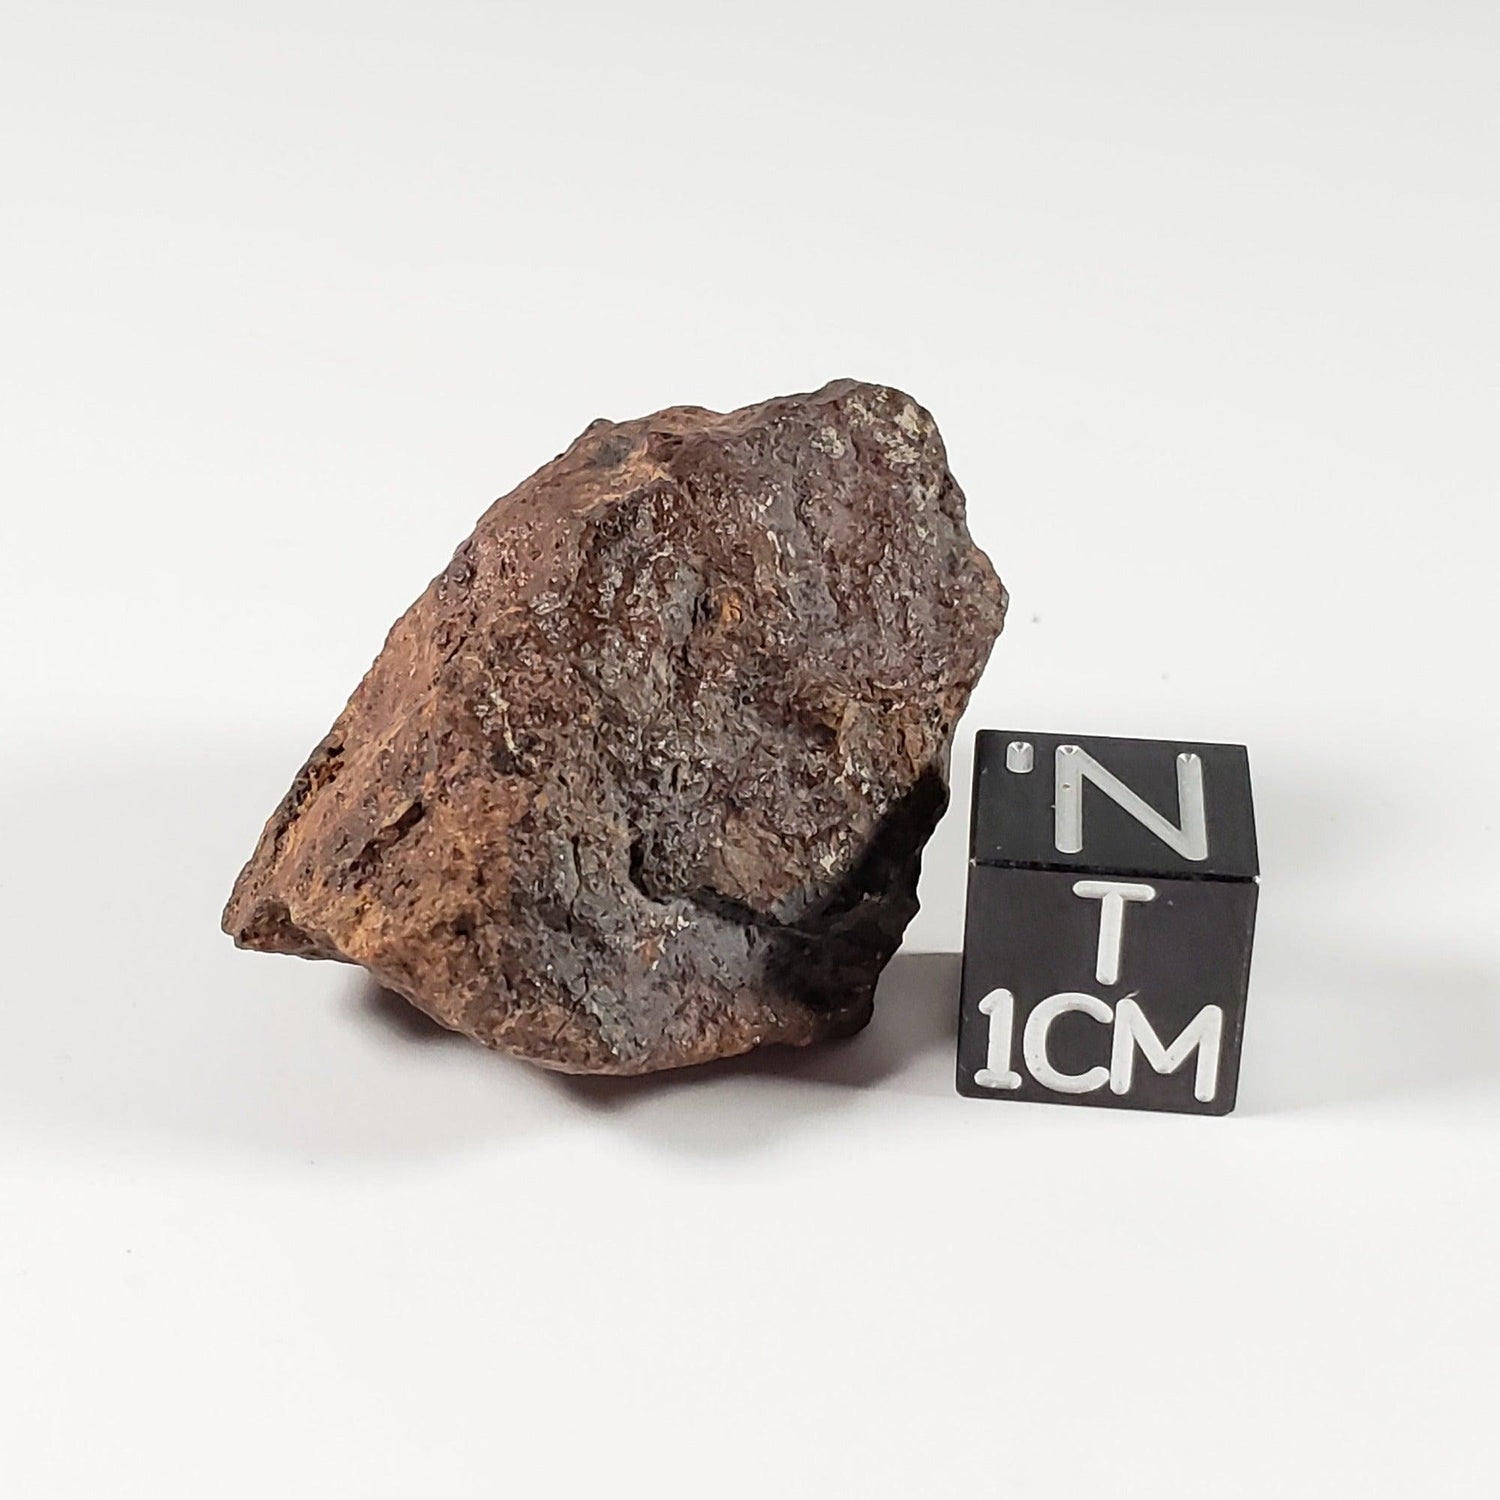 Gold Basin Meteorite | 21.43 Grams | Individual | L4 Chondrite | Arizona | Canagem.com